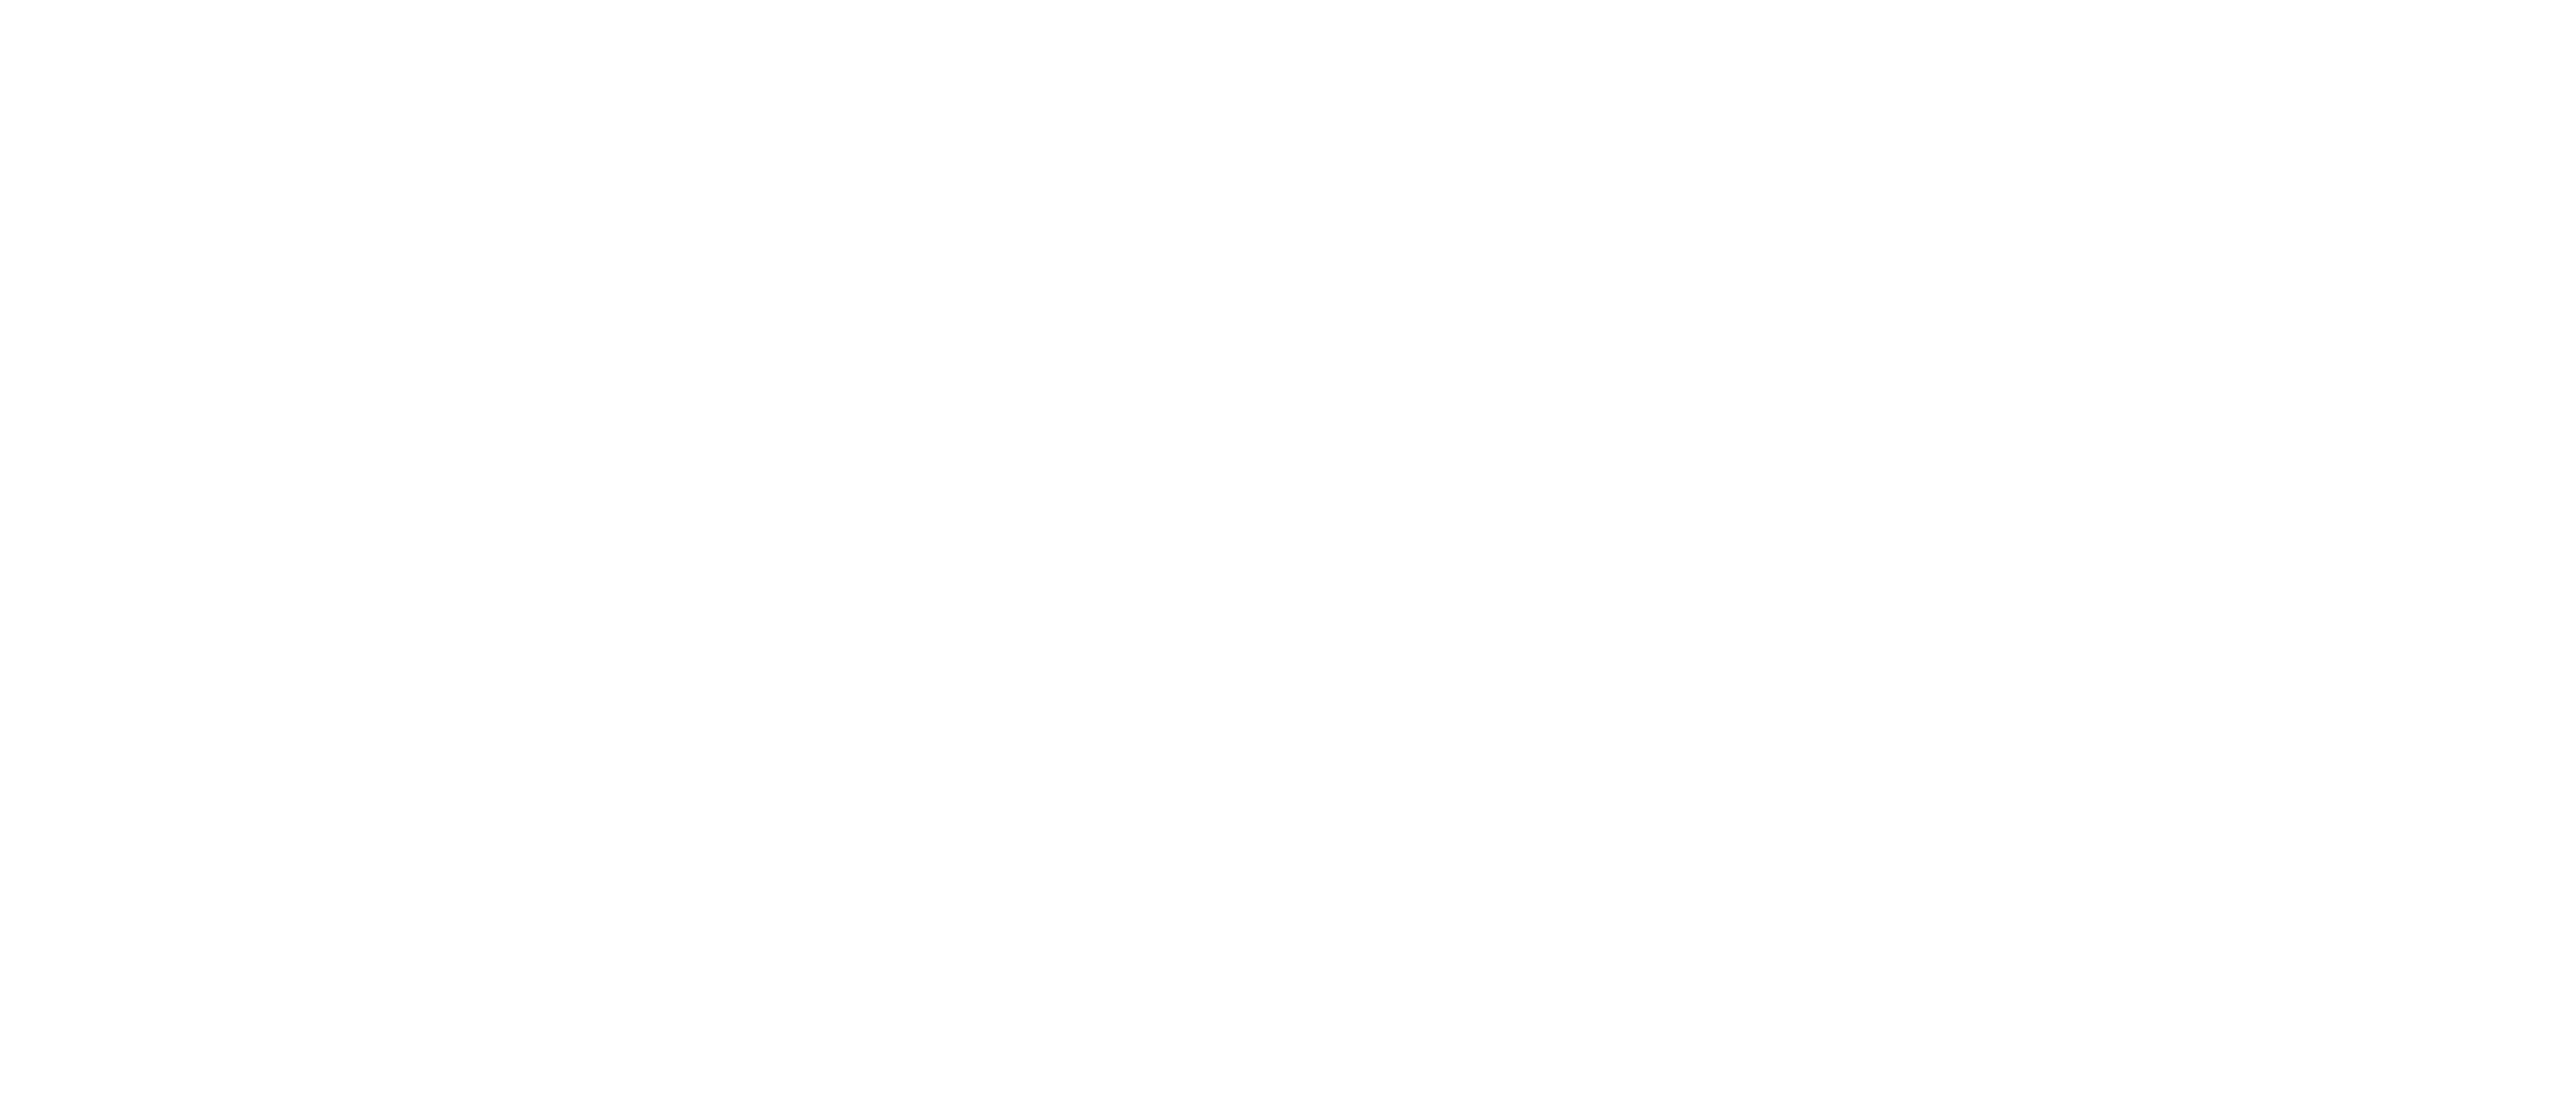 1-year warranty.